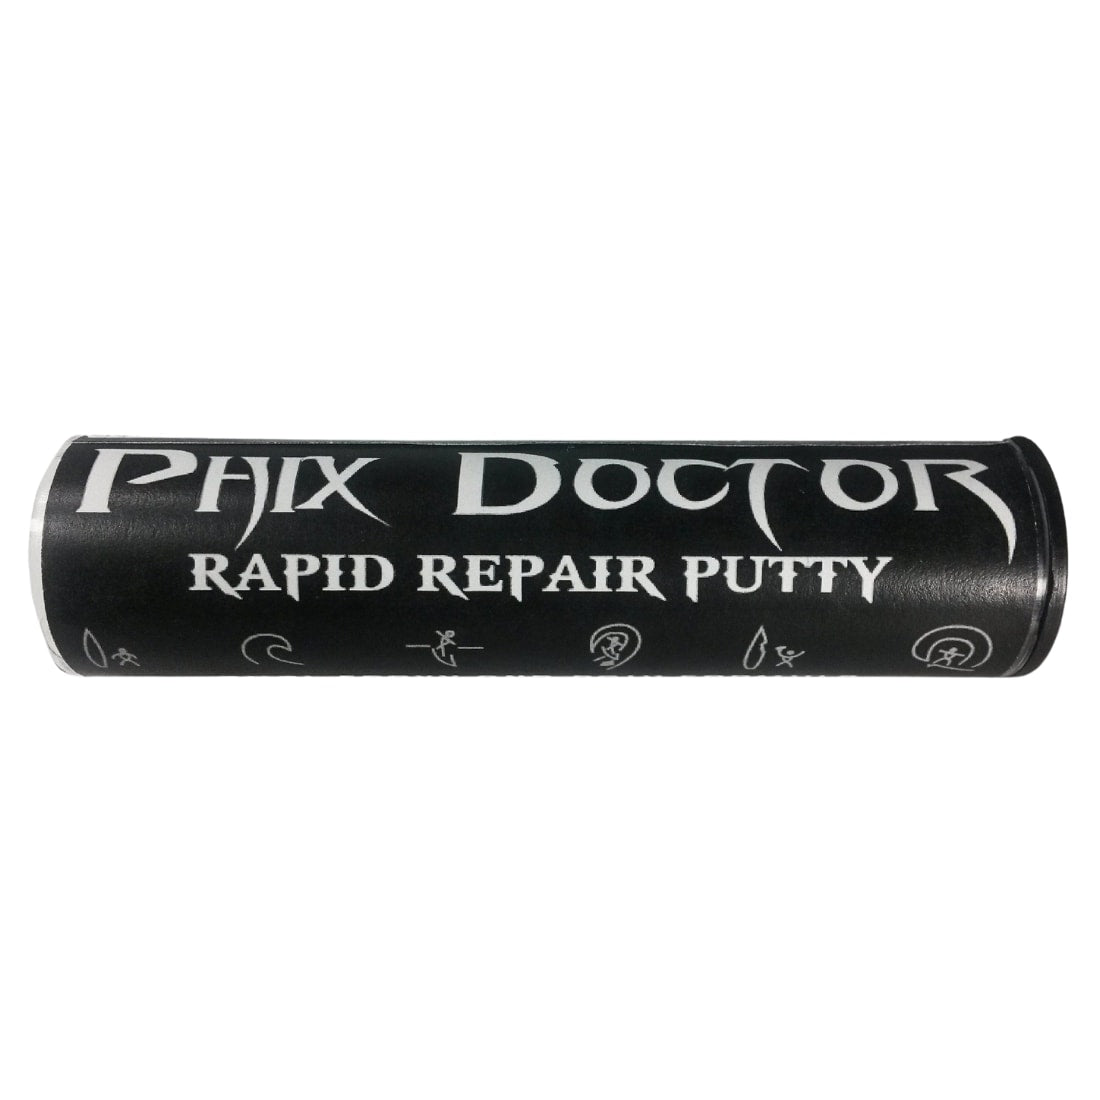 Phix Doctor Rapid Surfboard Repair Putty Stick - White - Putty Surfboard Repair by Phix Doctor One Size